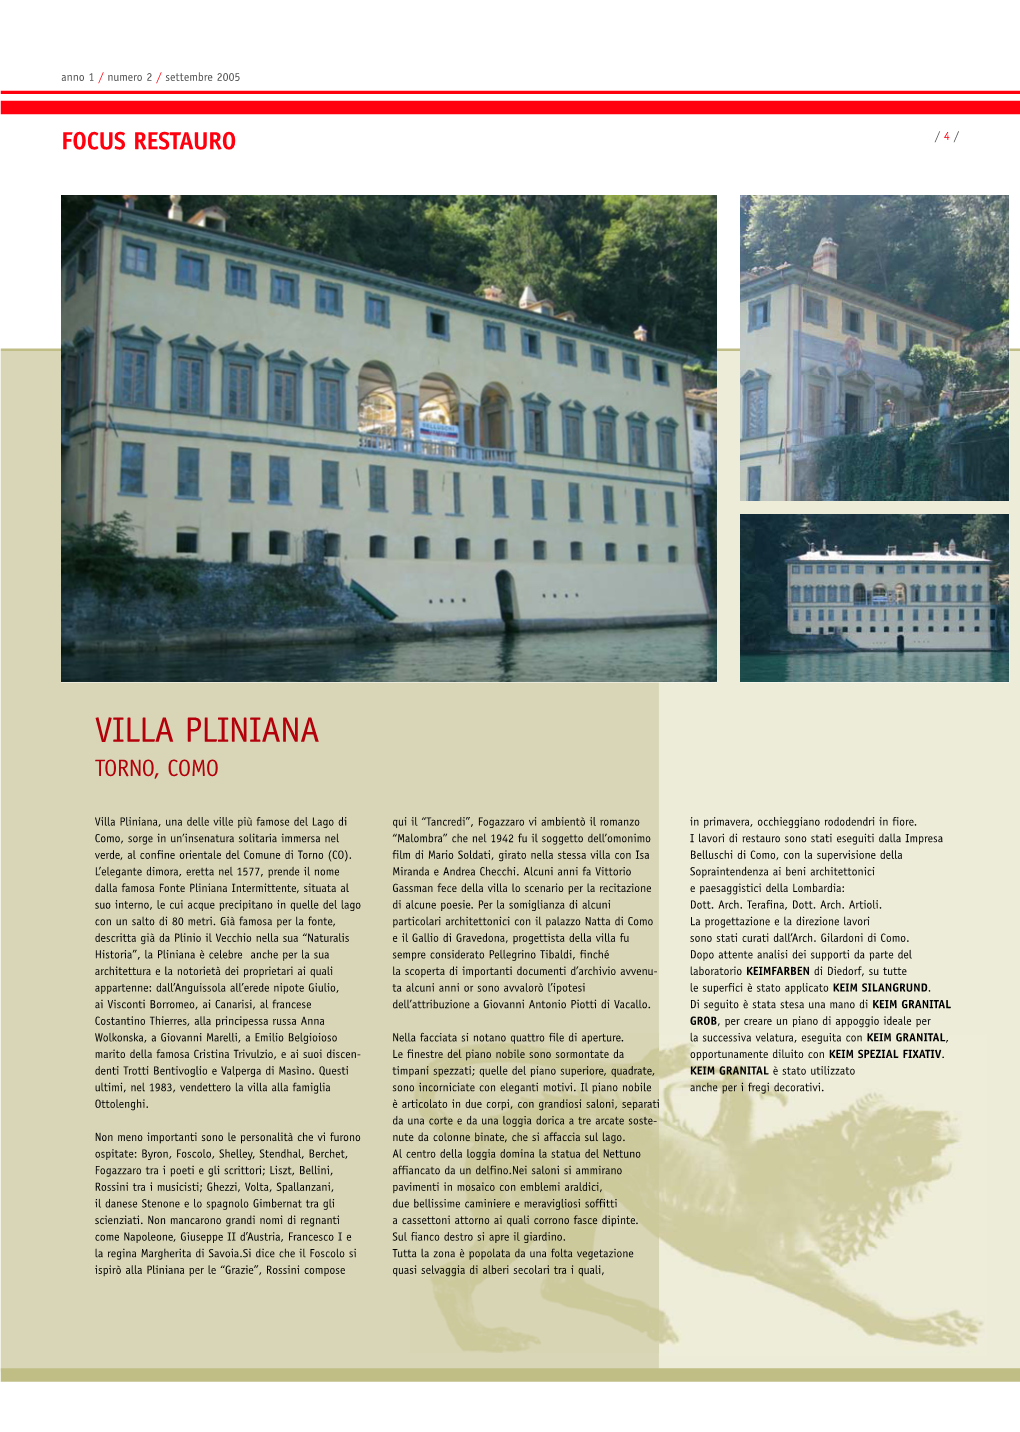 Villa Pliniana